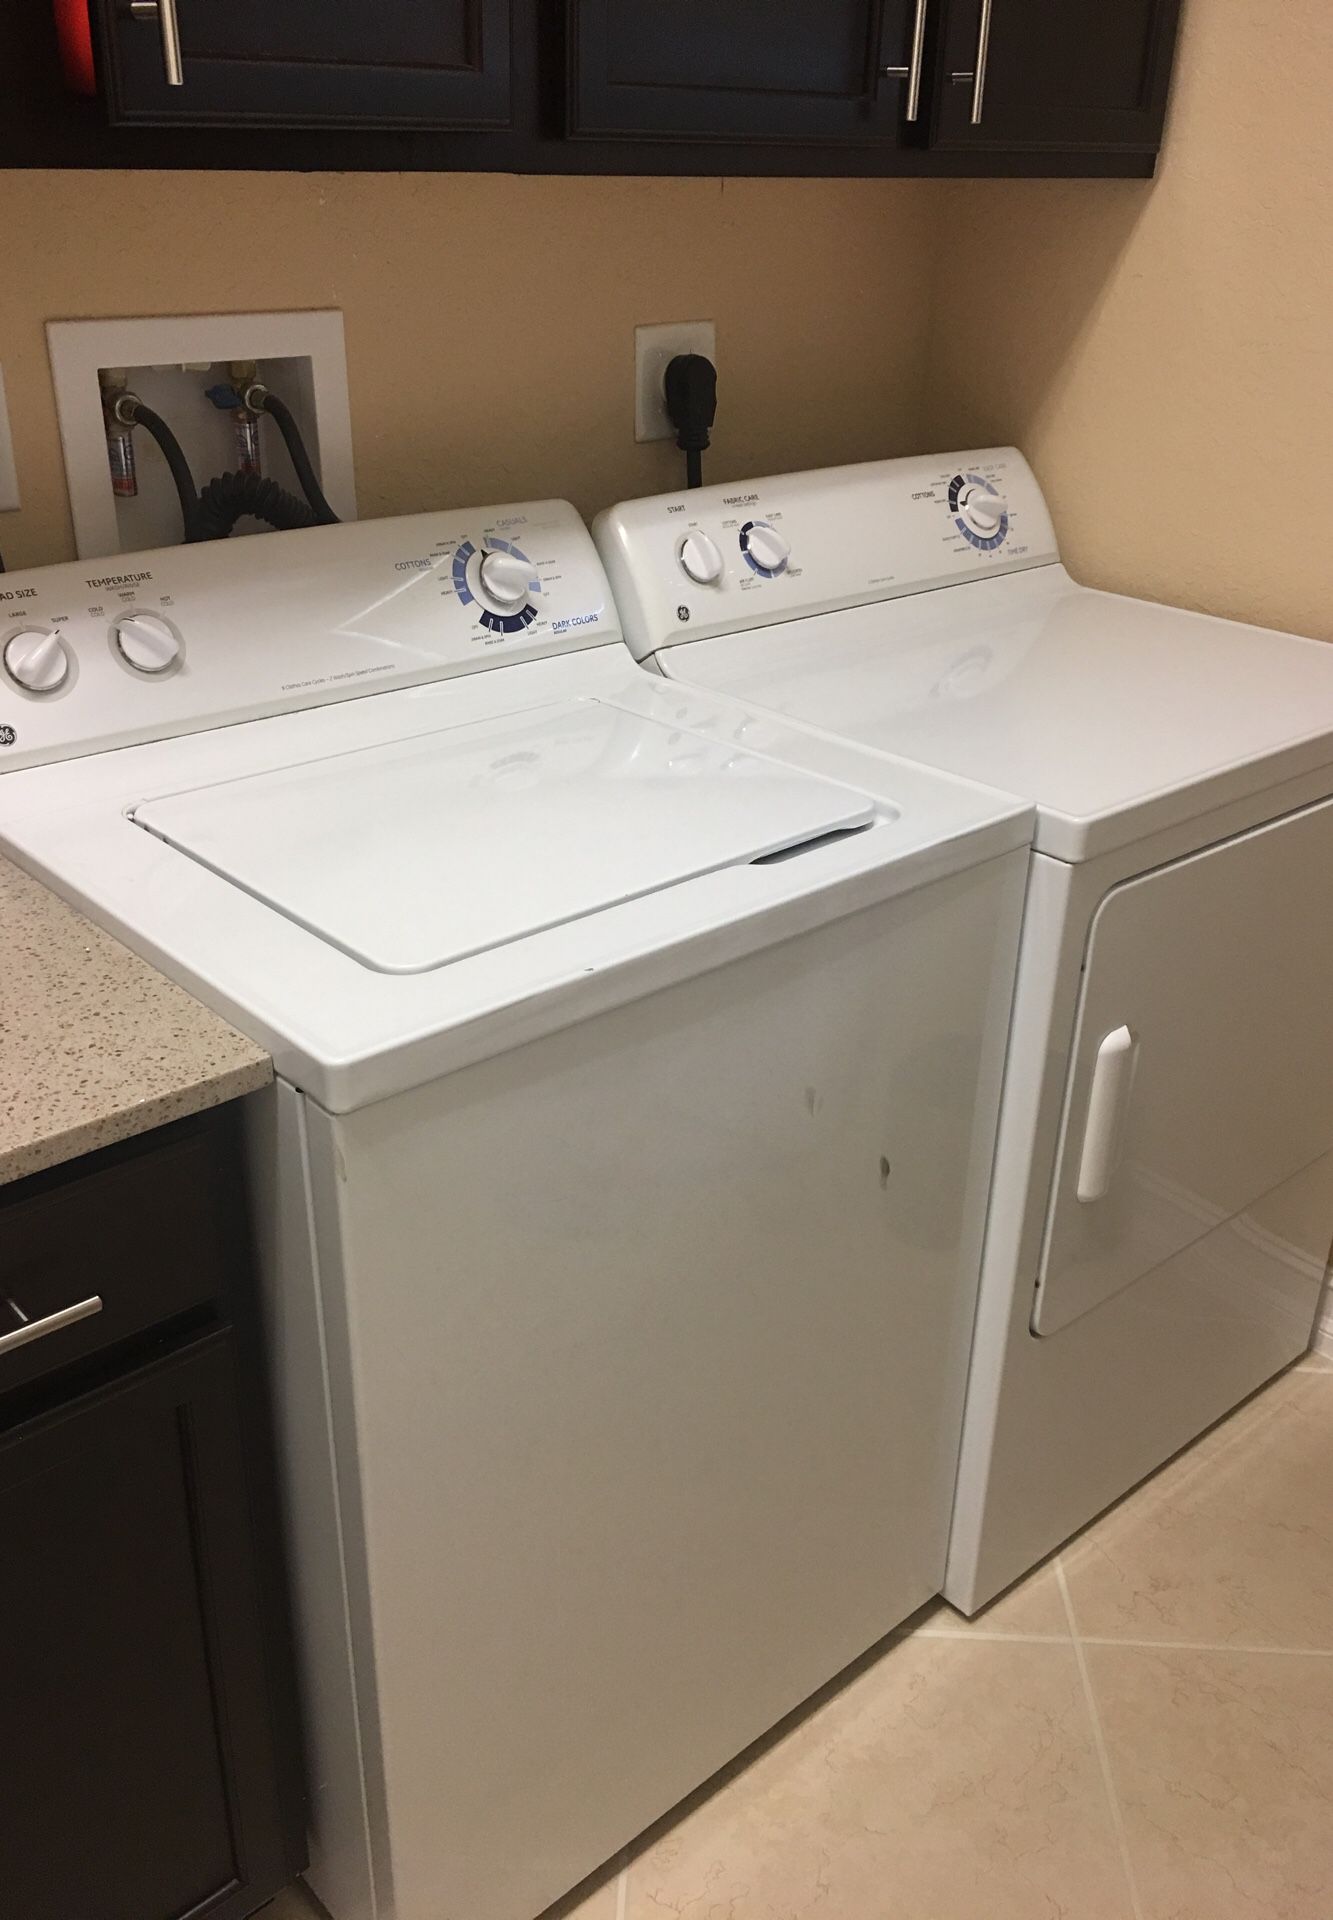 Washing machine by GE